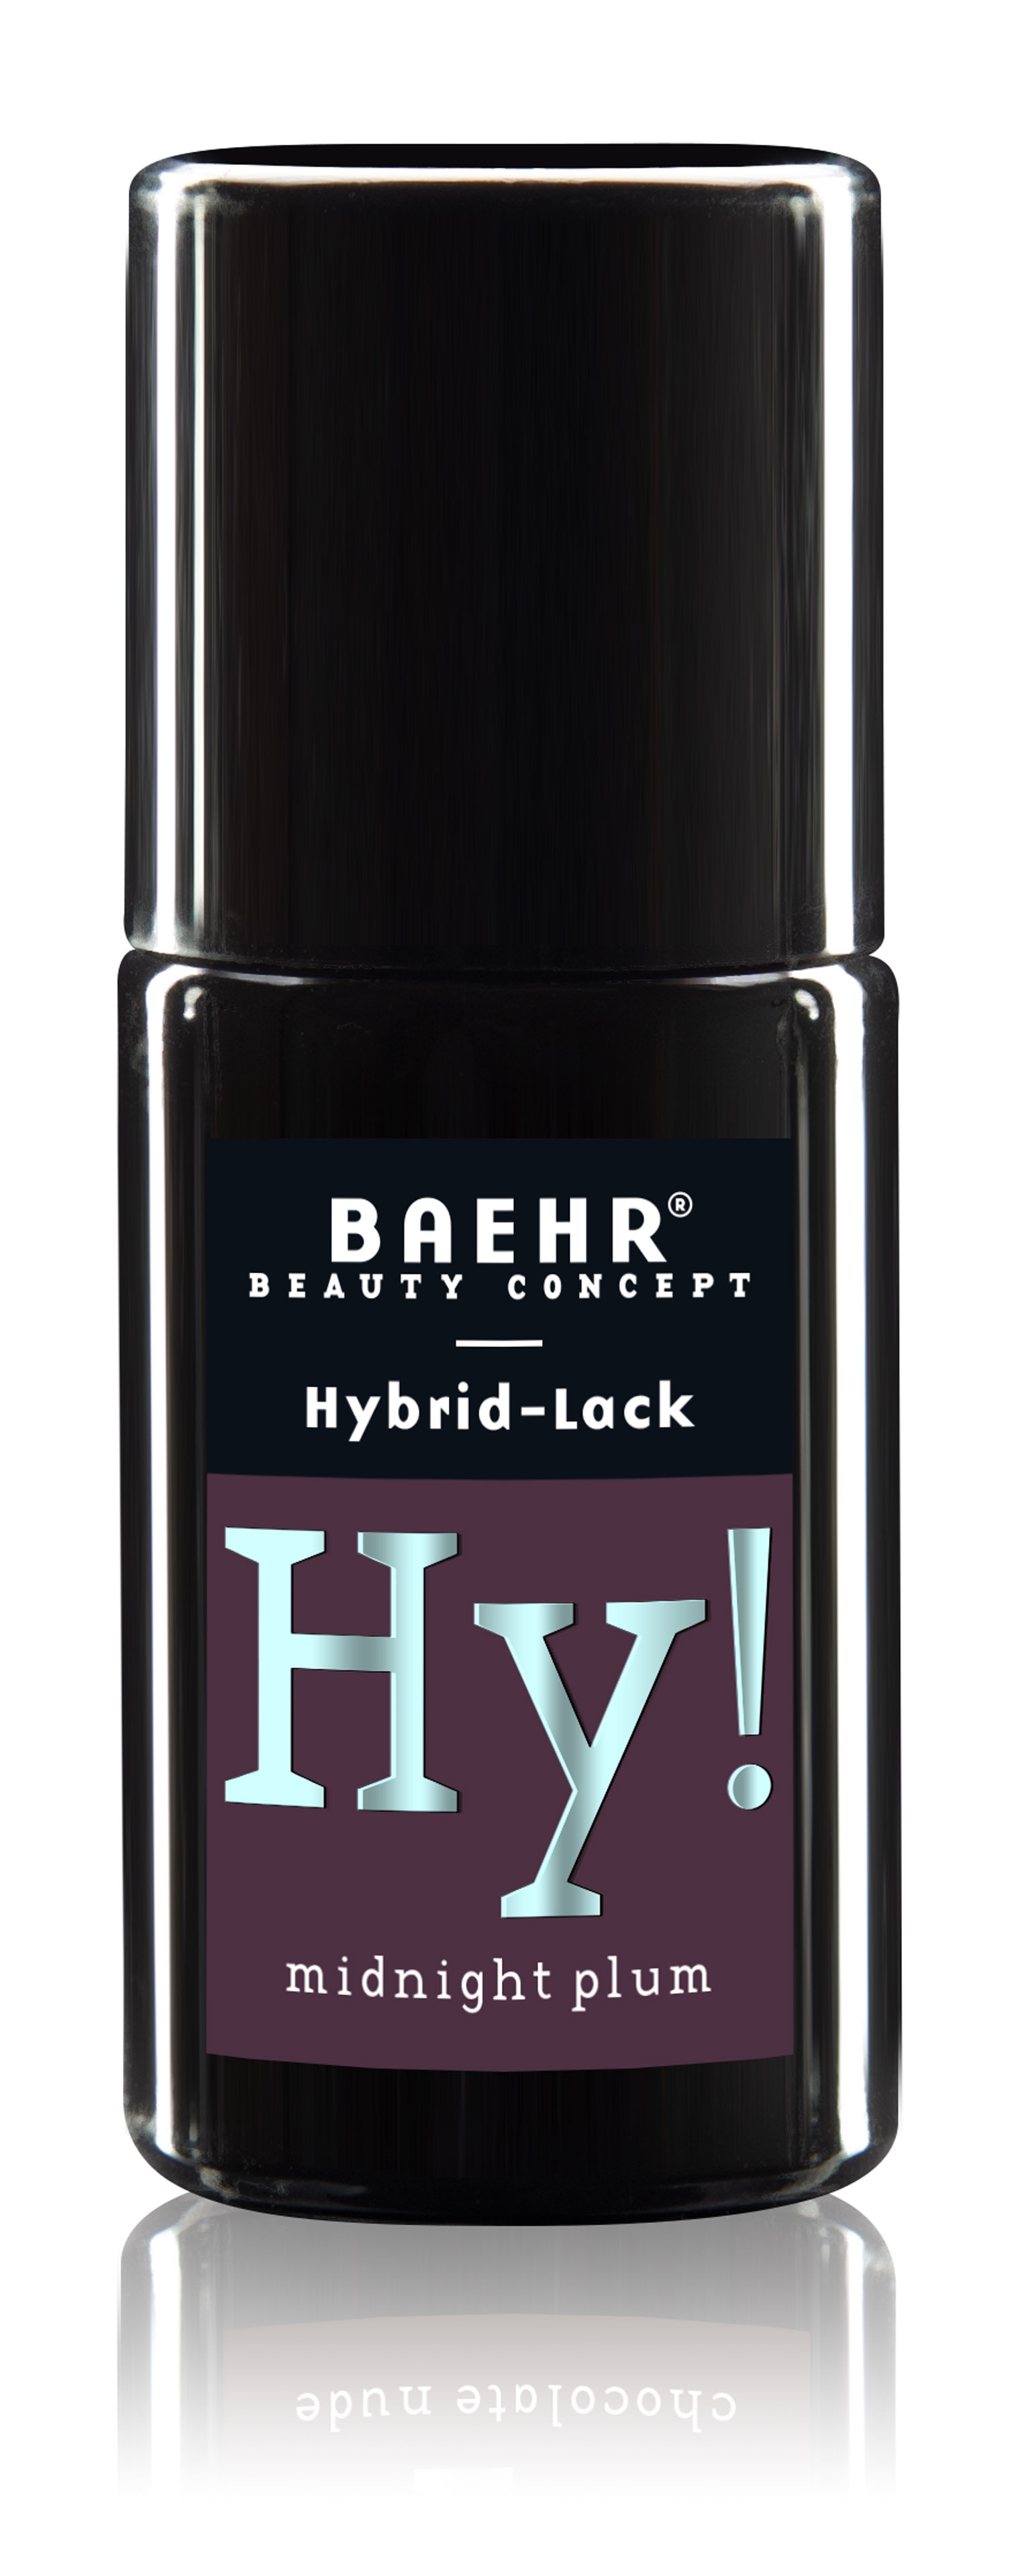 BAEHR BEAUTY CONCEPT - NAILS Hy! Hybrid-Lack, midnight plum 8 ml